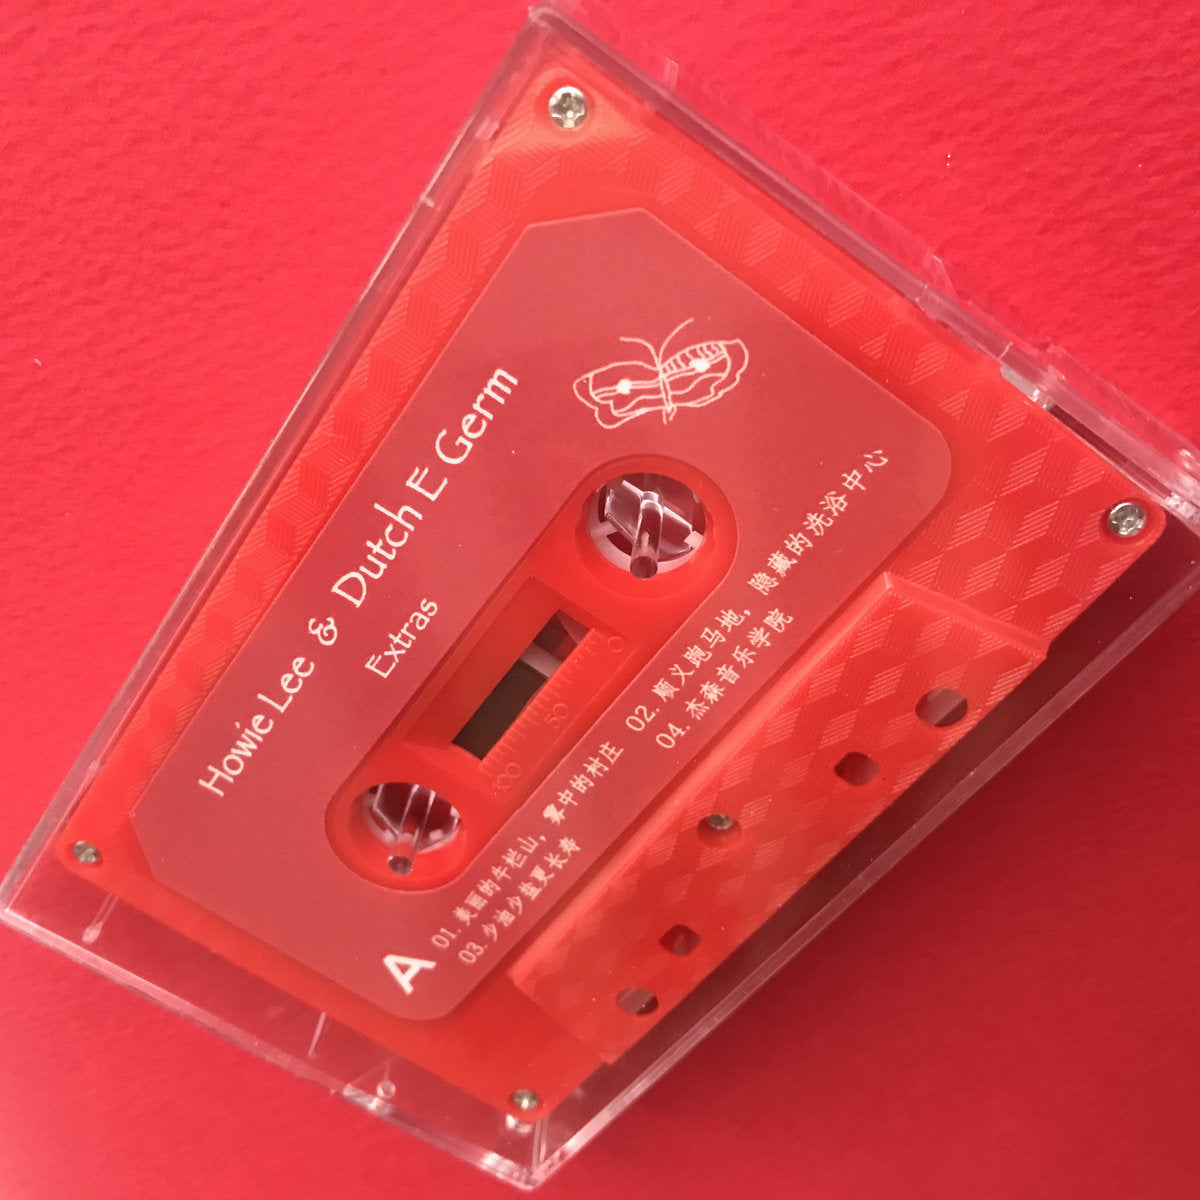 Howie Lee & Dutch E Germ/Extras cassette tape